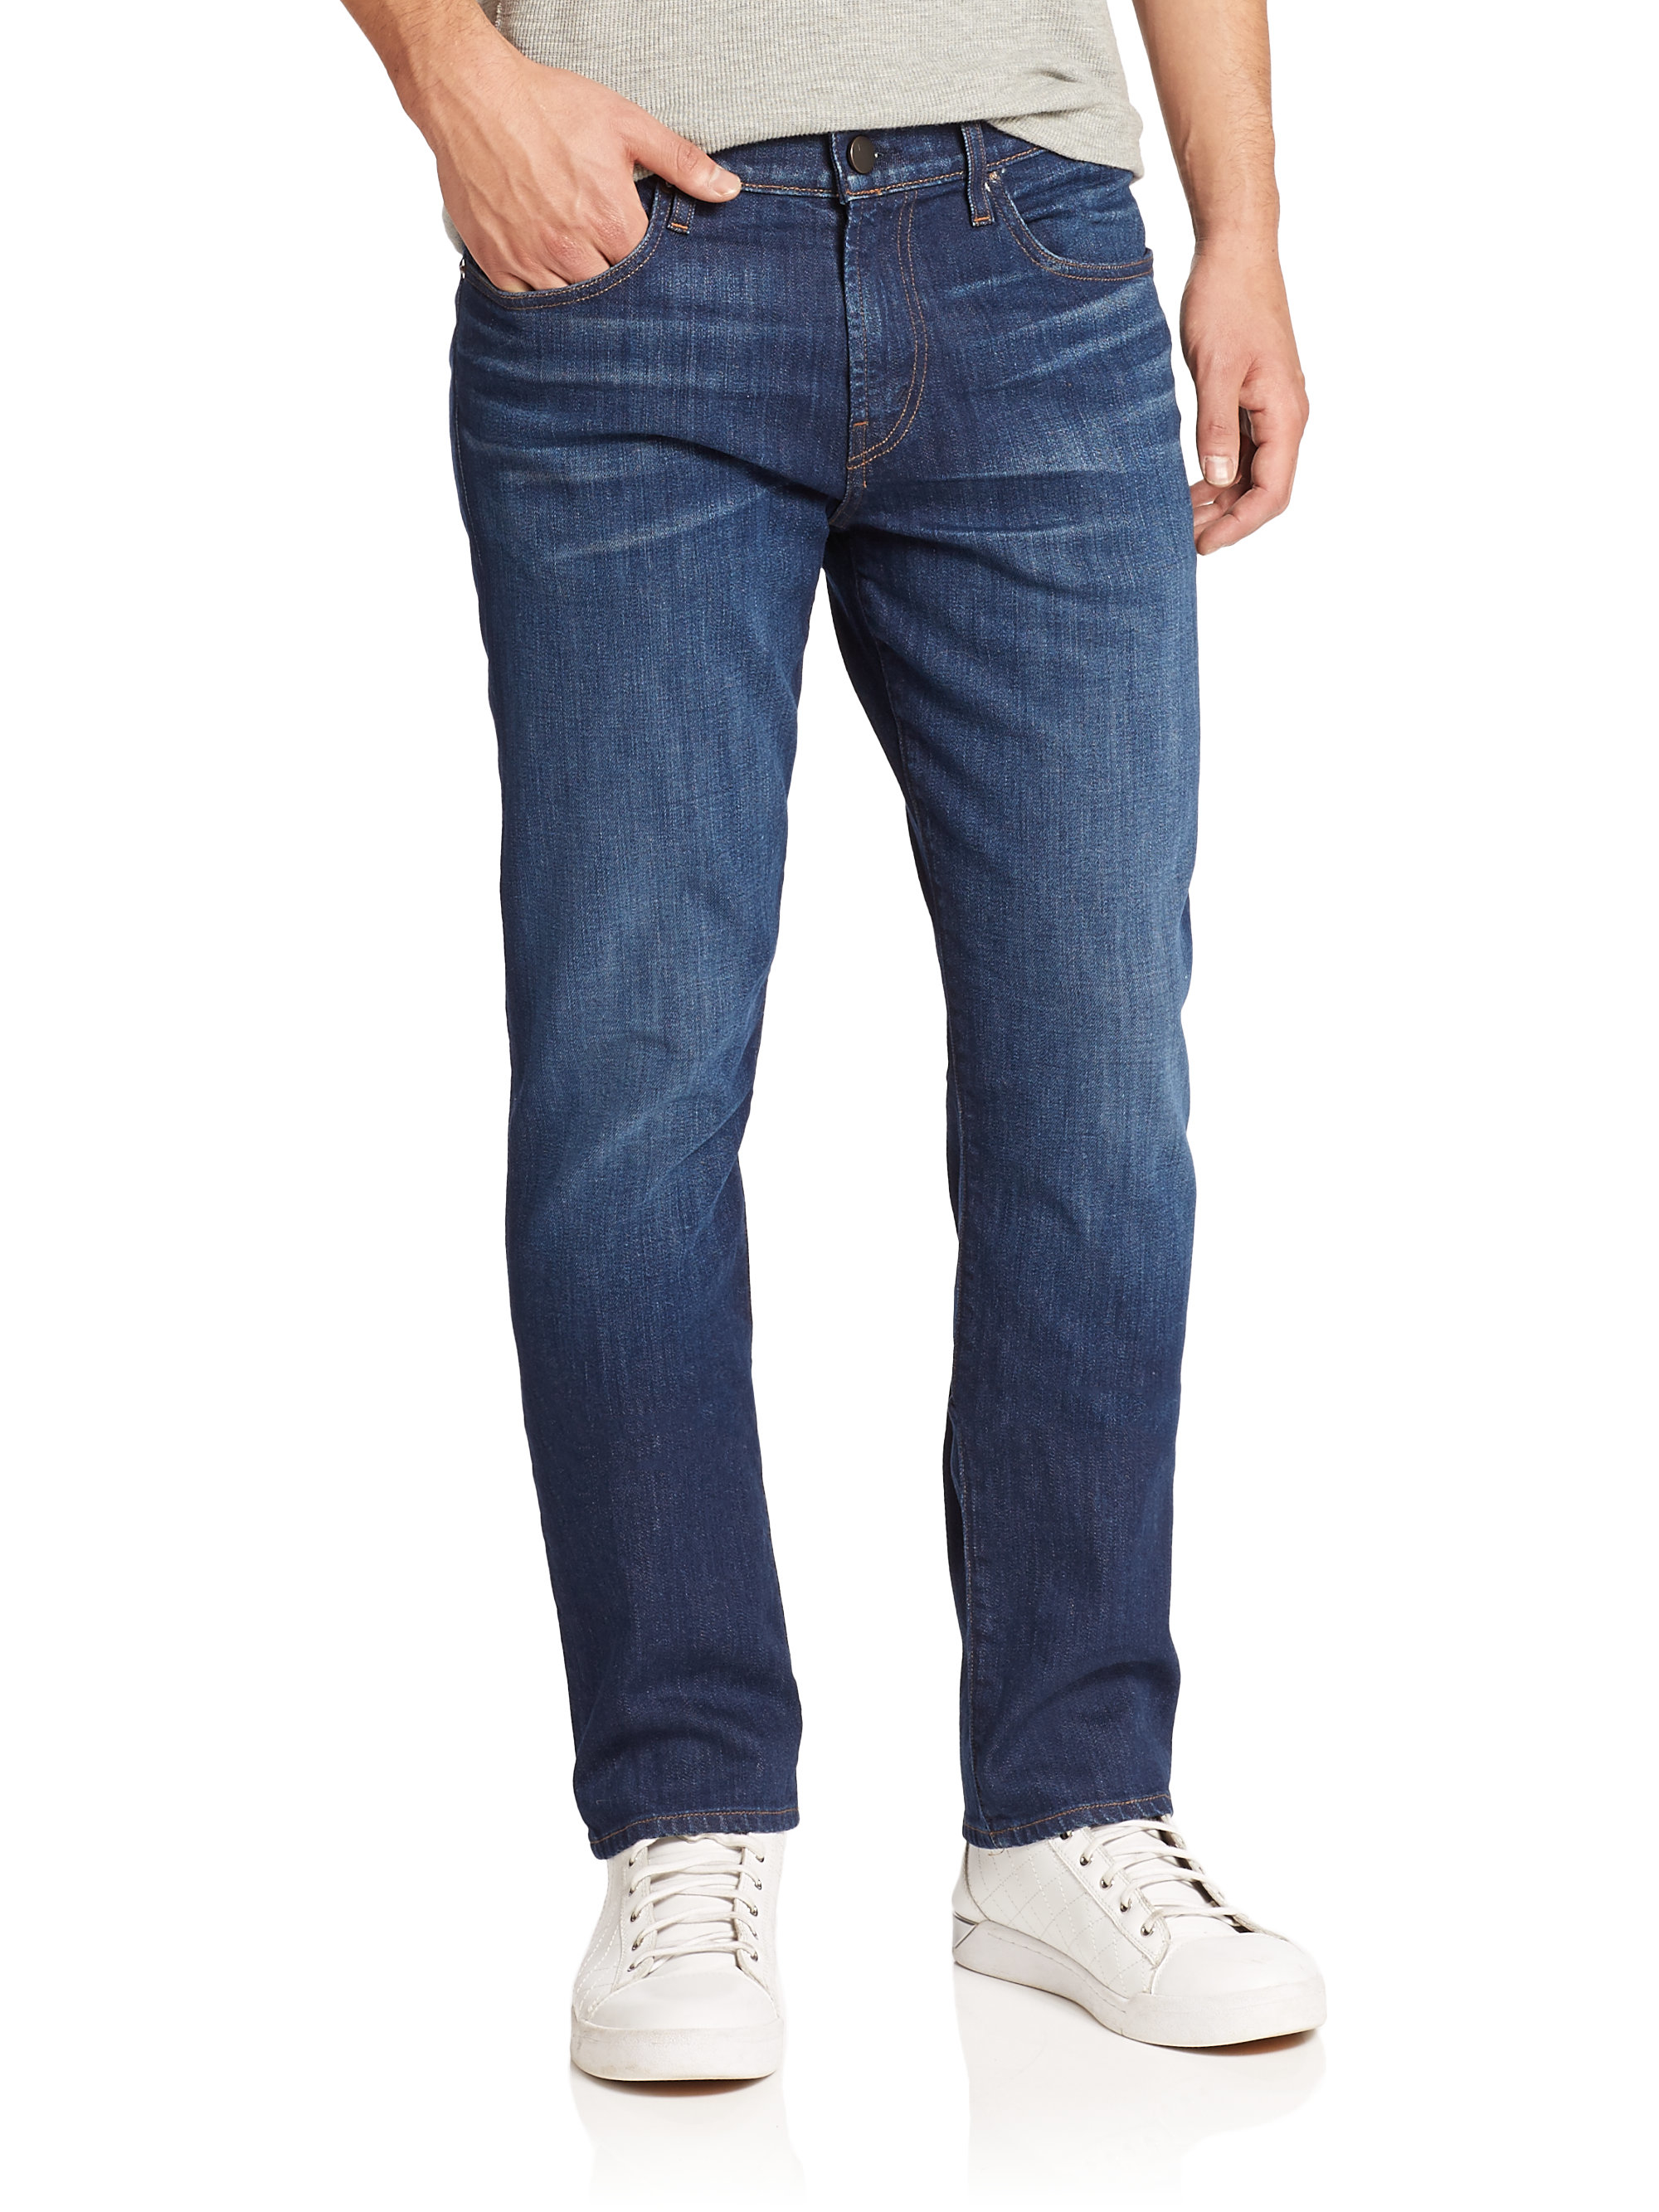 Lyst - J brand Cole Straight Leg Jeans in Blue for Men